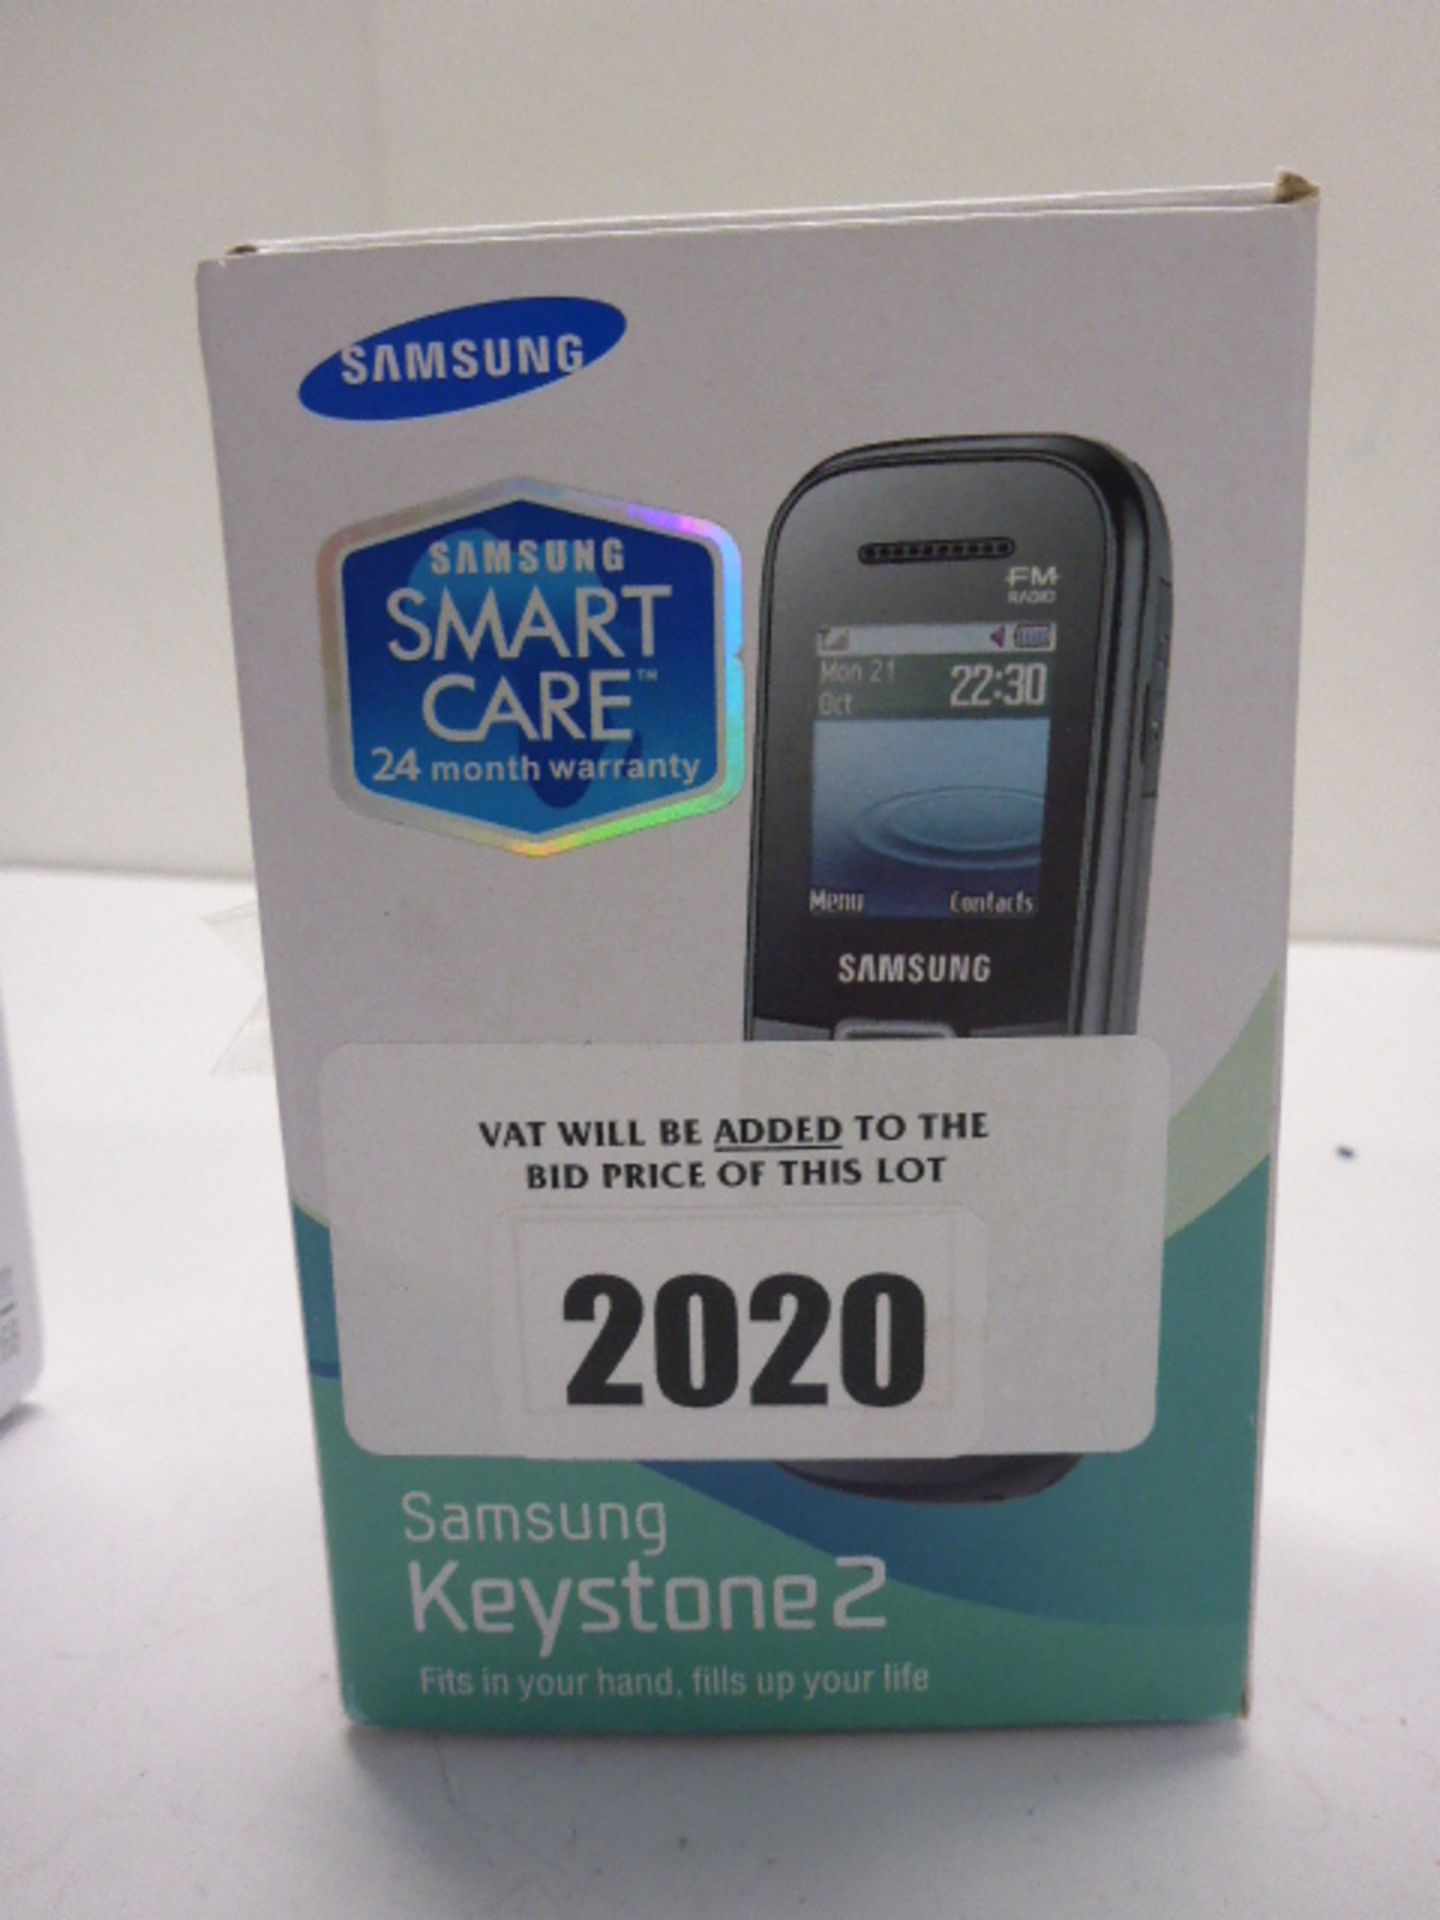 Samsung Keystone2 black mobile phone